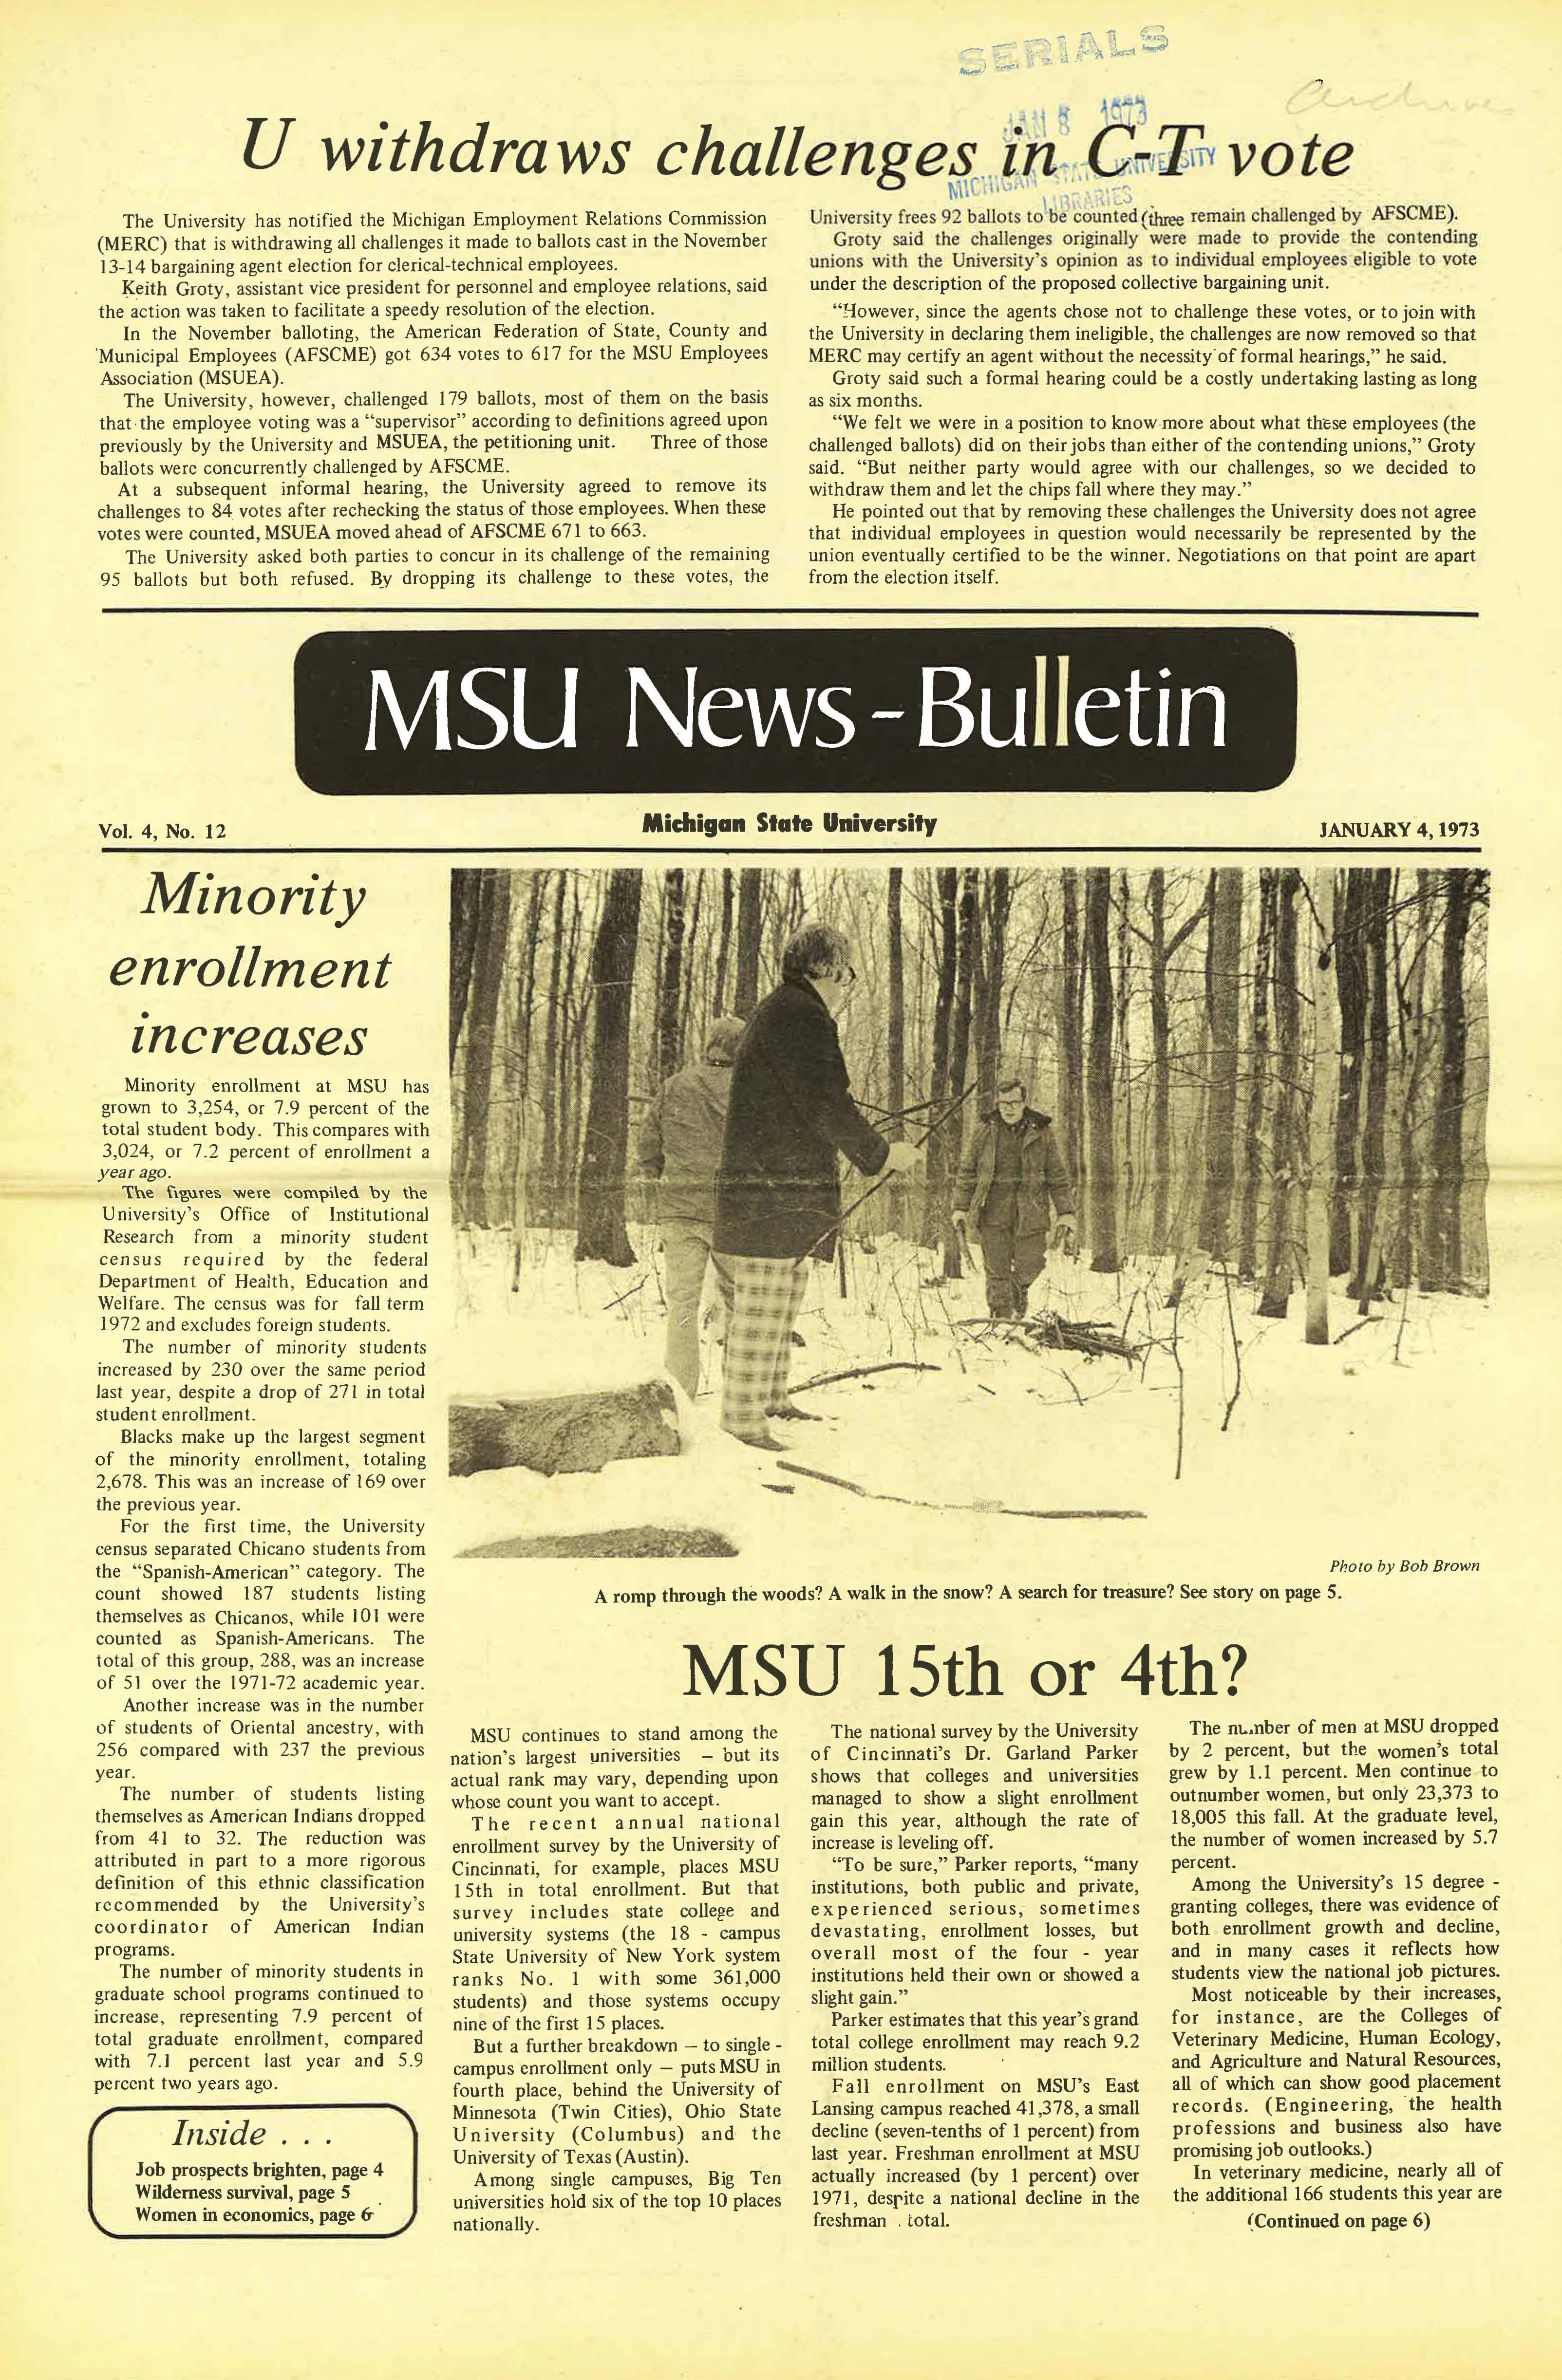 MSU News Bulletin, vol. 4, No. 22, March 29, 1973